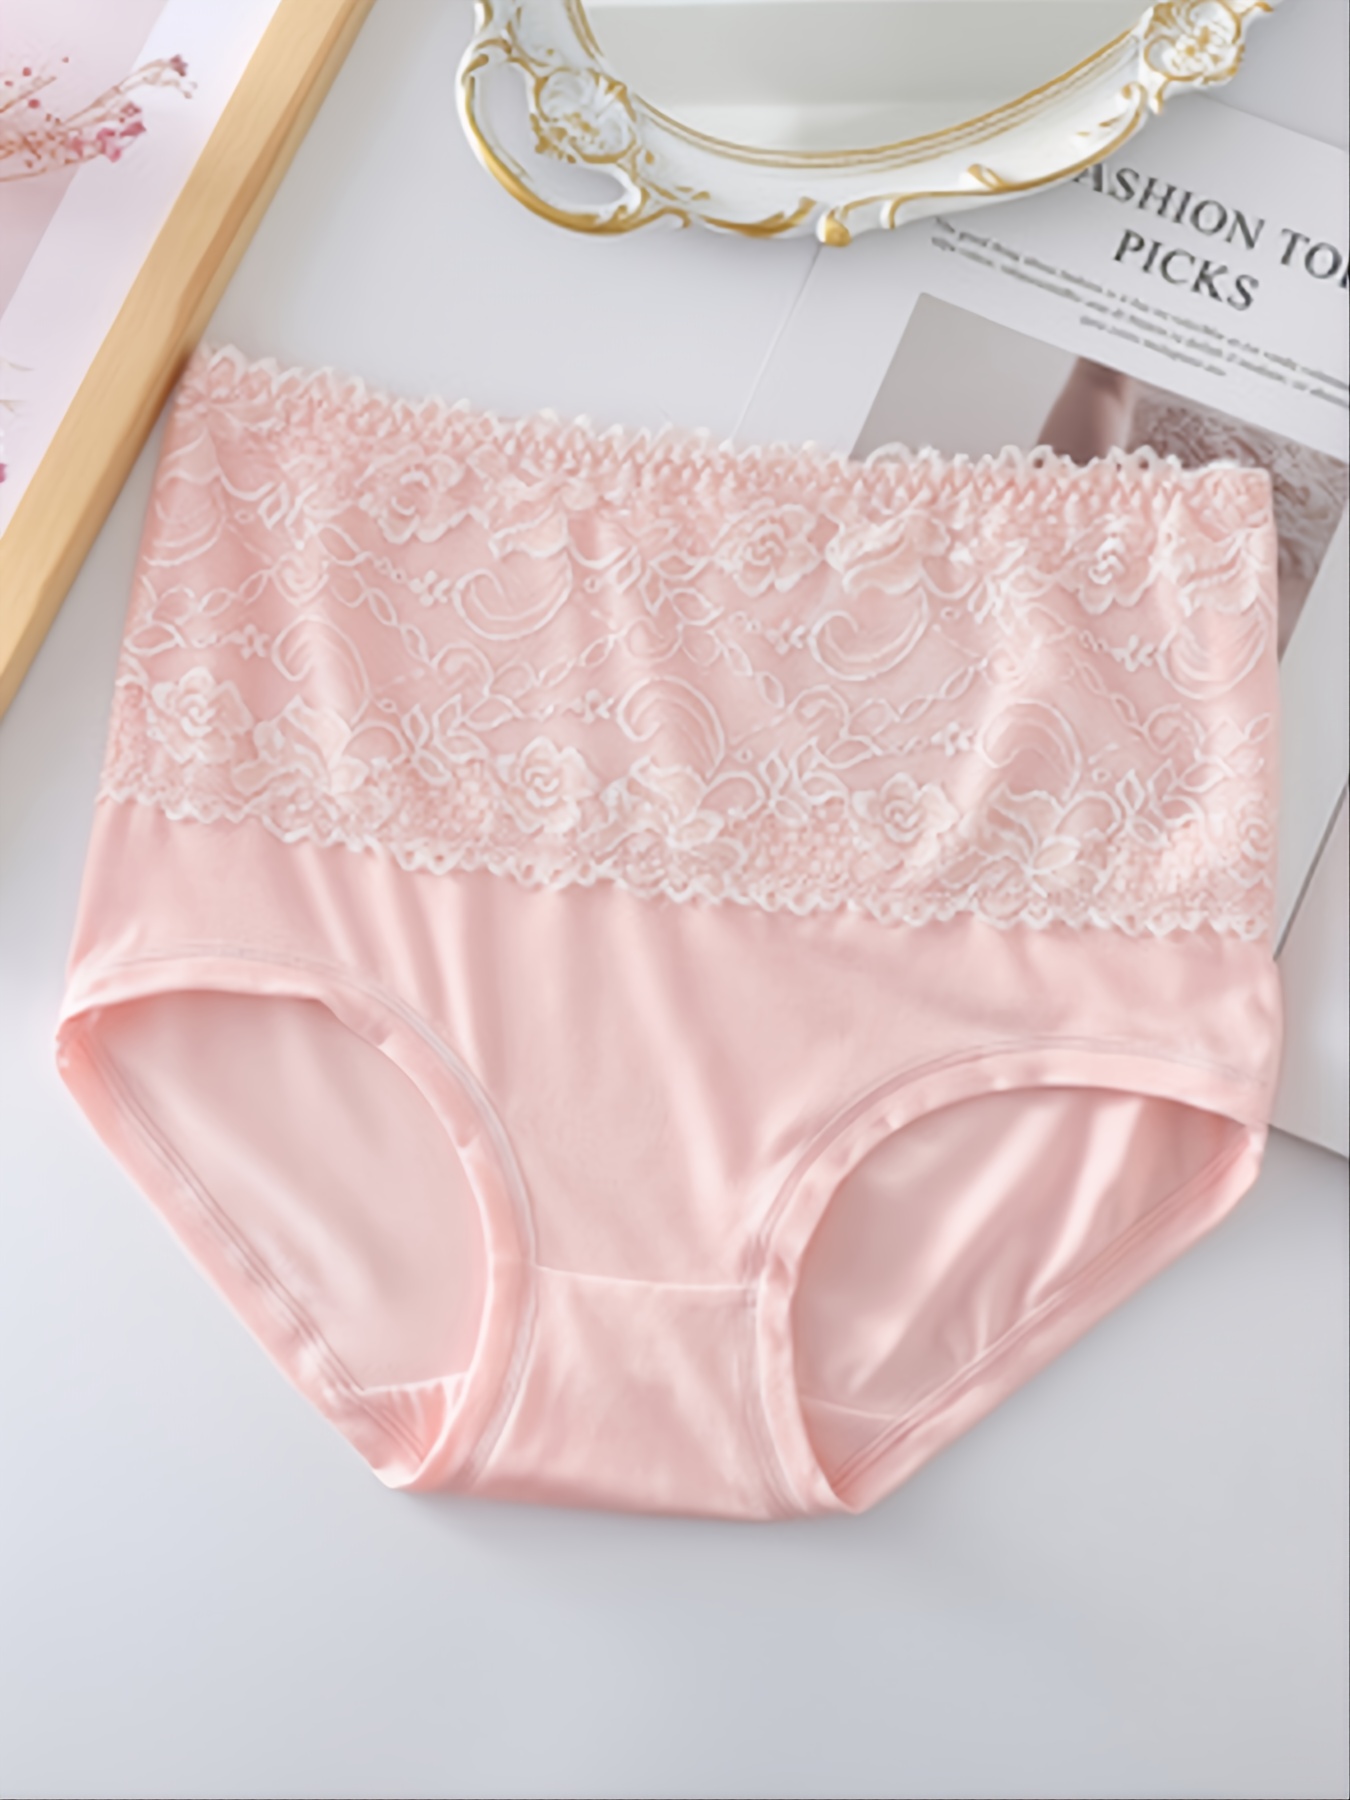 Ladies' Breathable Top Quality Colorful Cotton Panty Hot Sale Women  Underwear Plus Size Panties